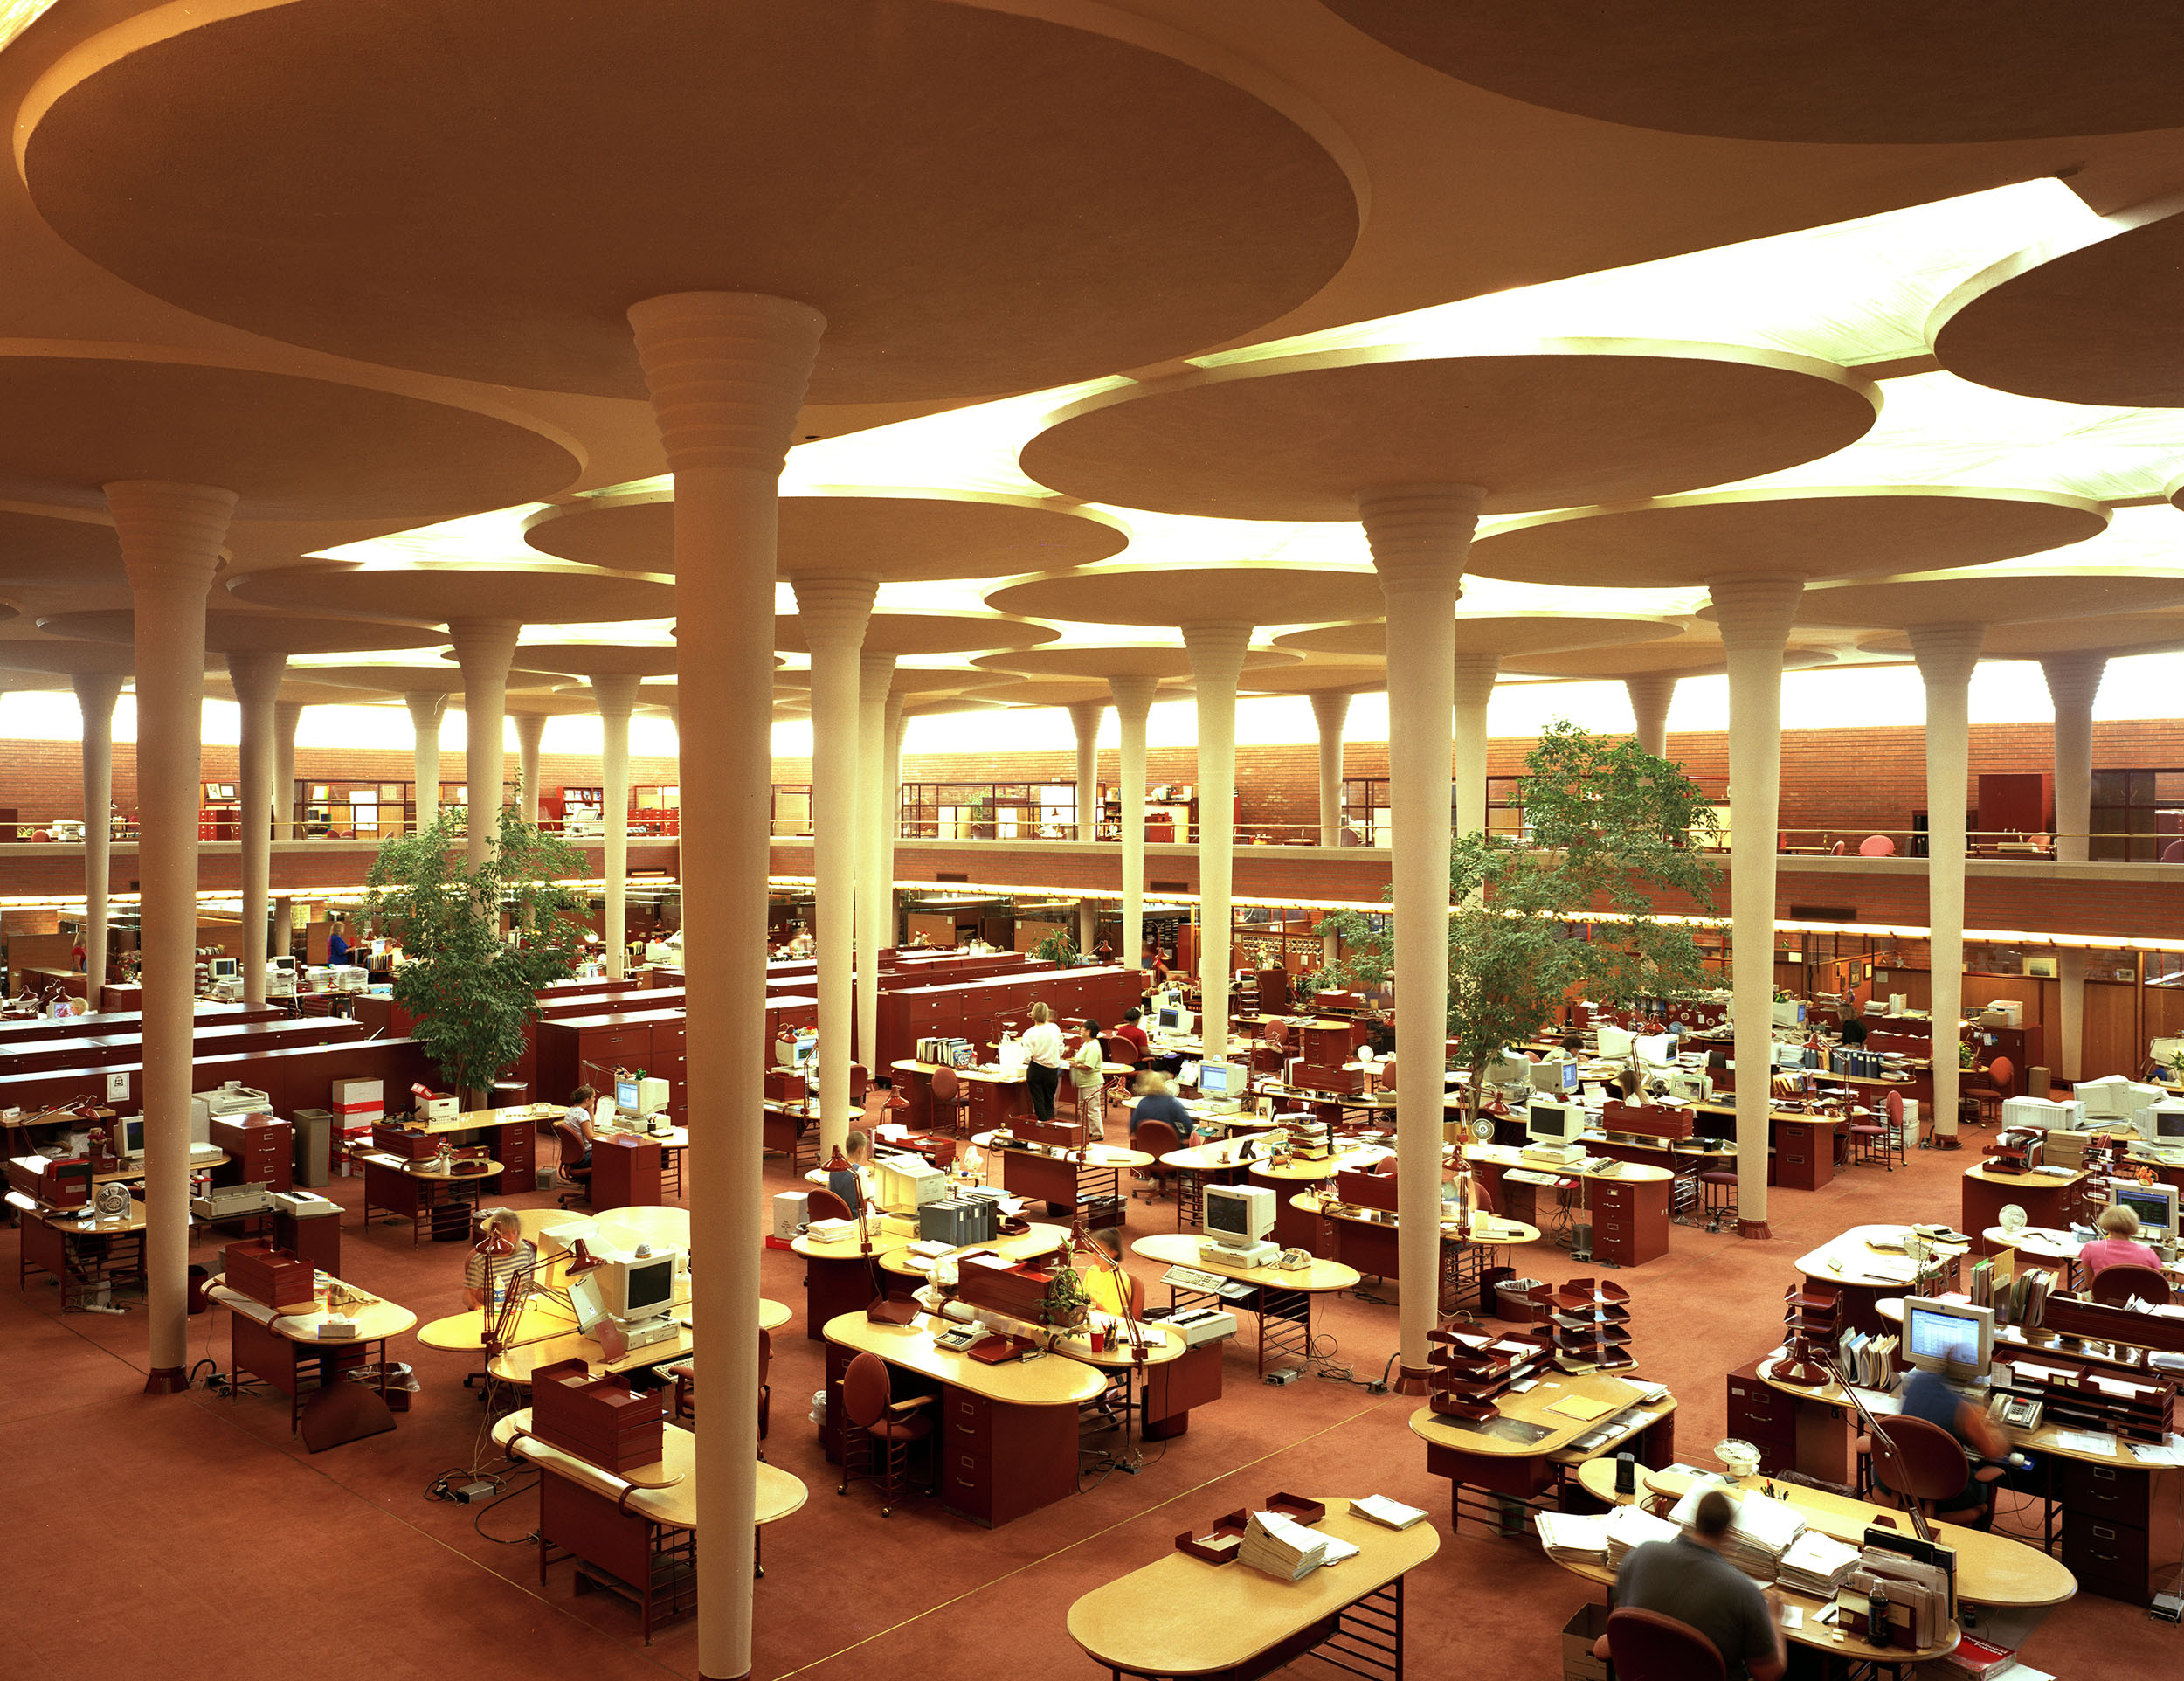 The Great Workroom in Frank Lloyd Wright's Johnson Wax Headquarters. Source: https://www.loc.gov/item/2011633764/